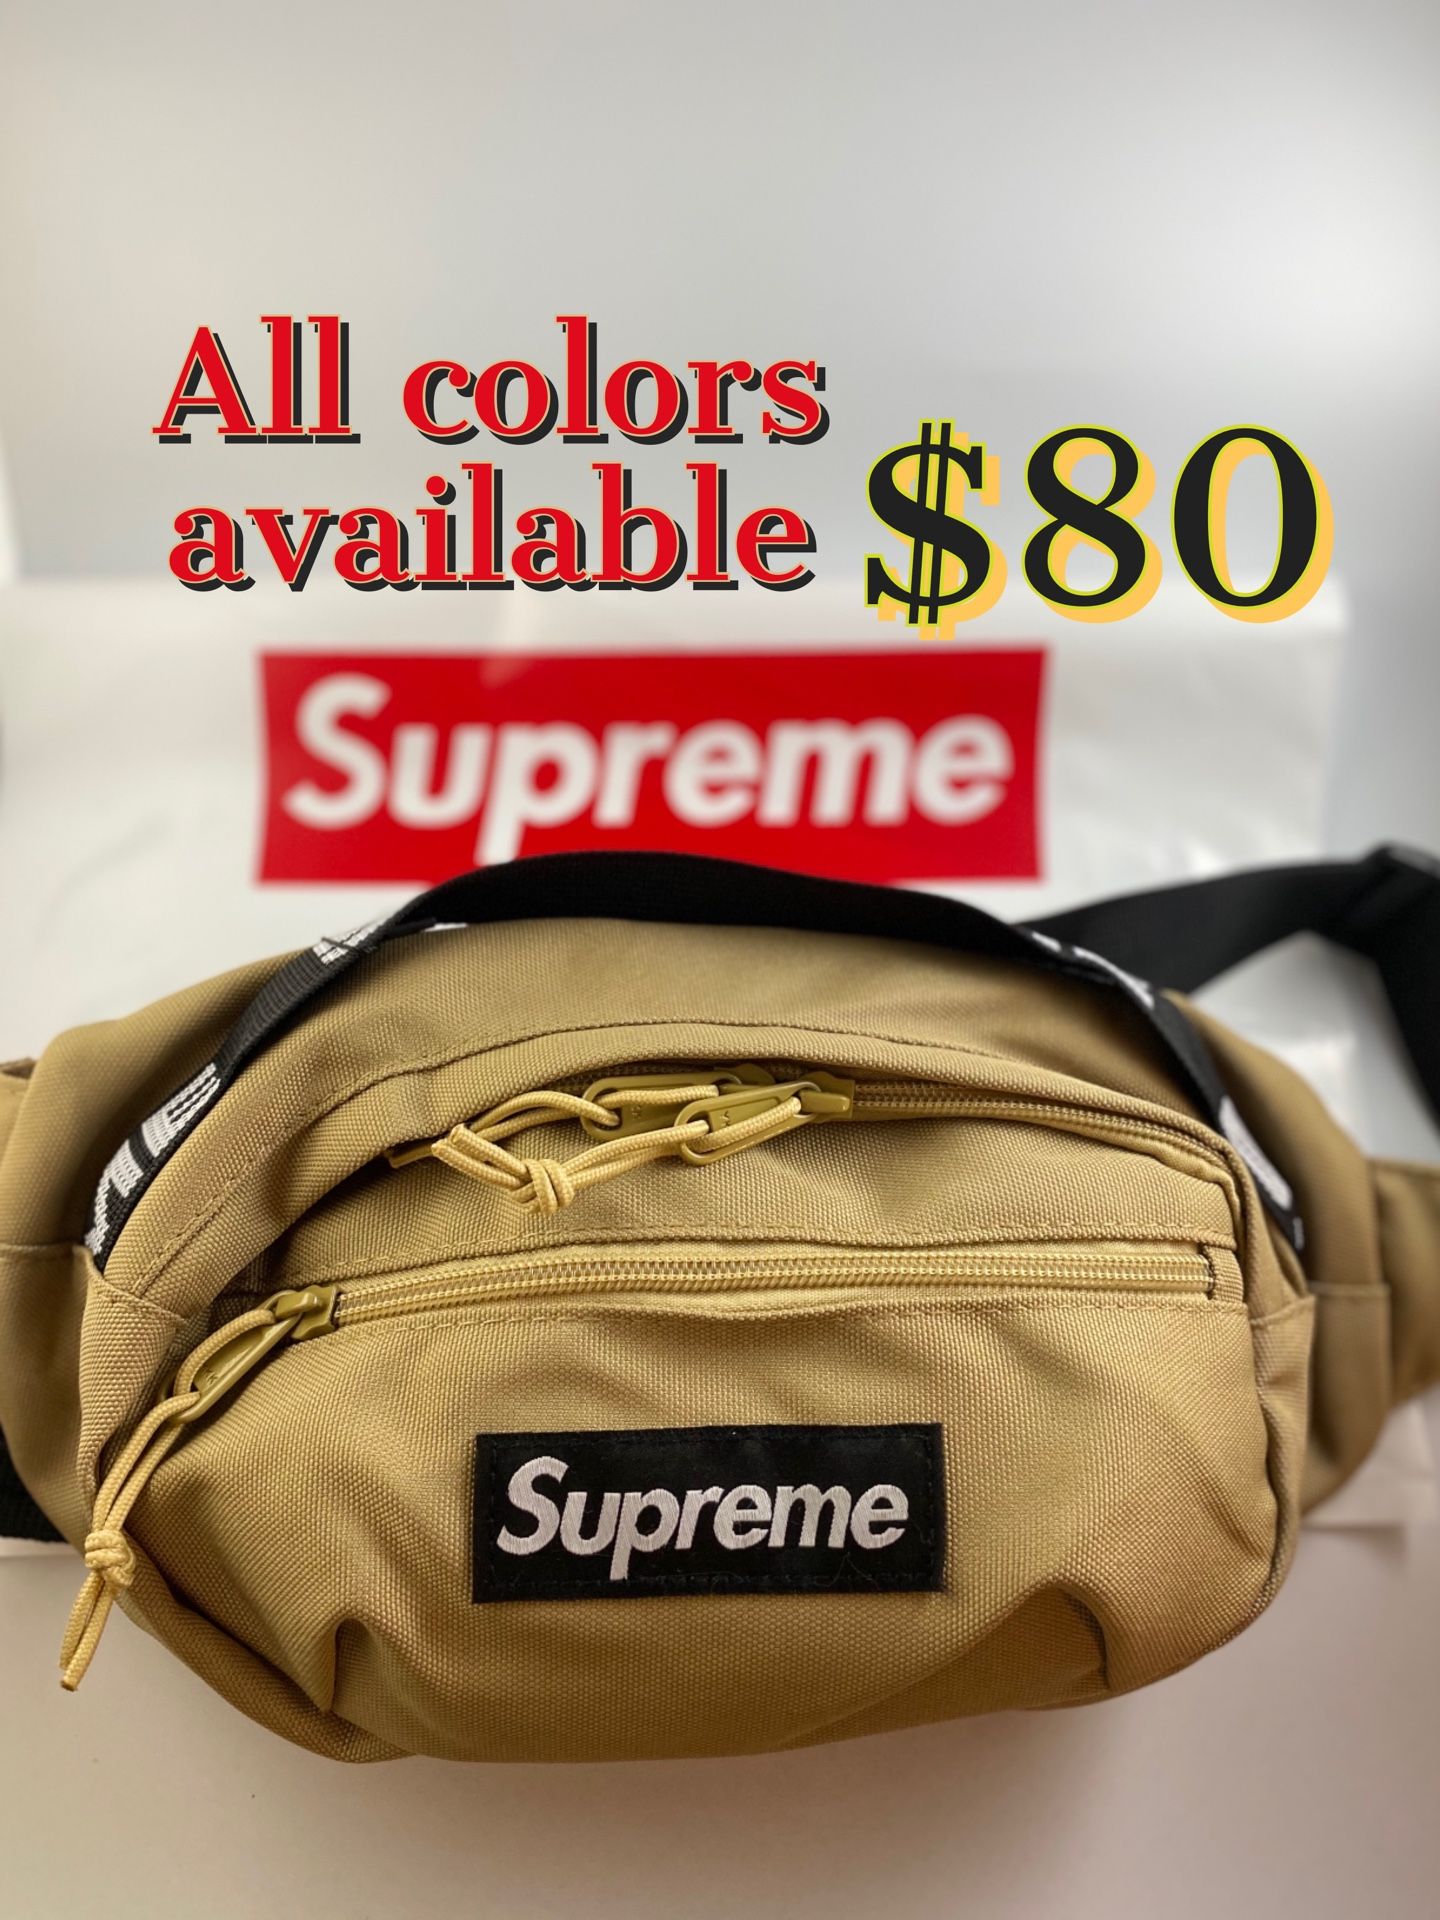 Supreme Waist Bag Brand New All Colors Available 